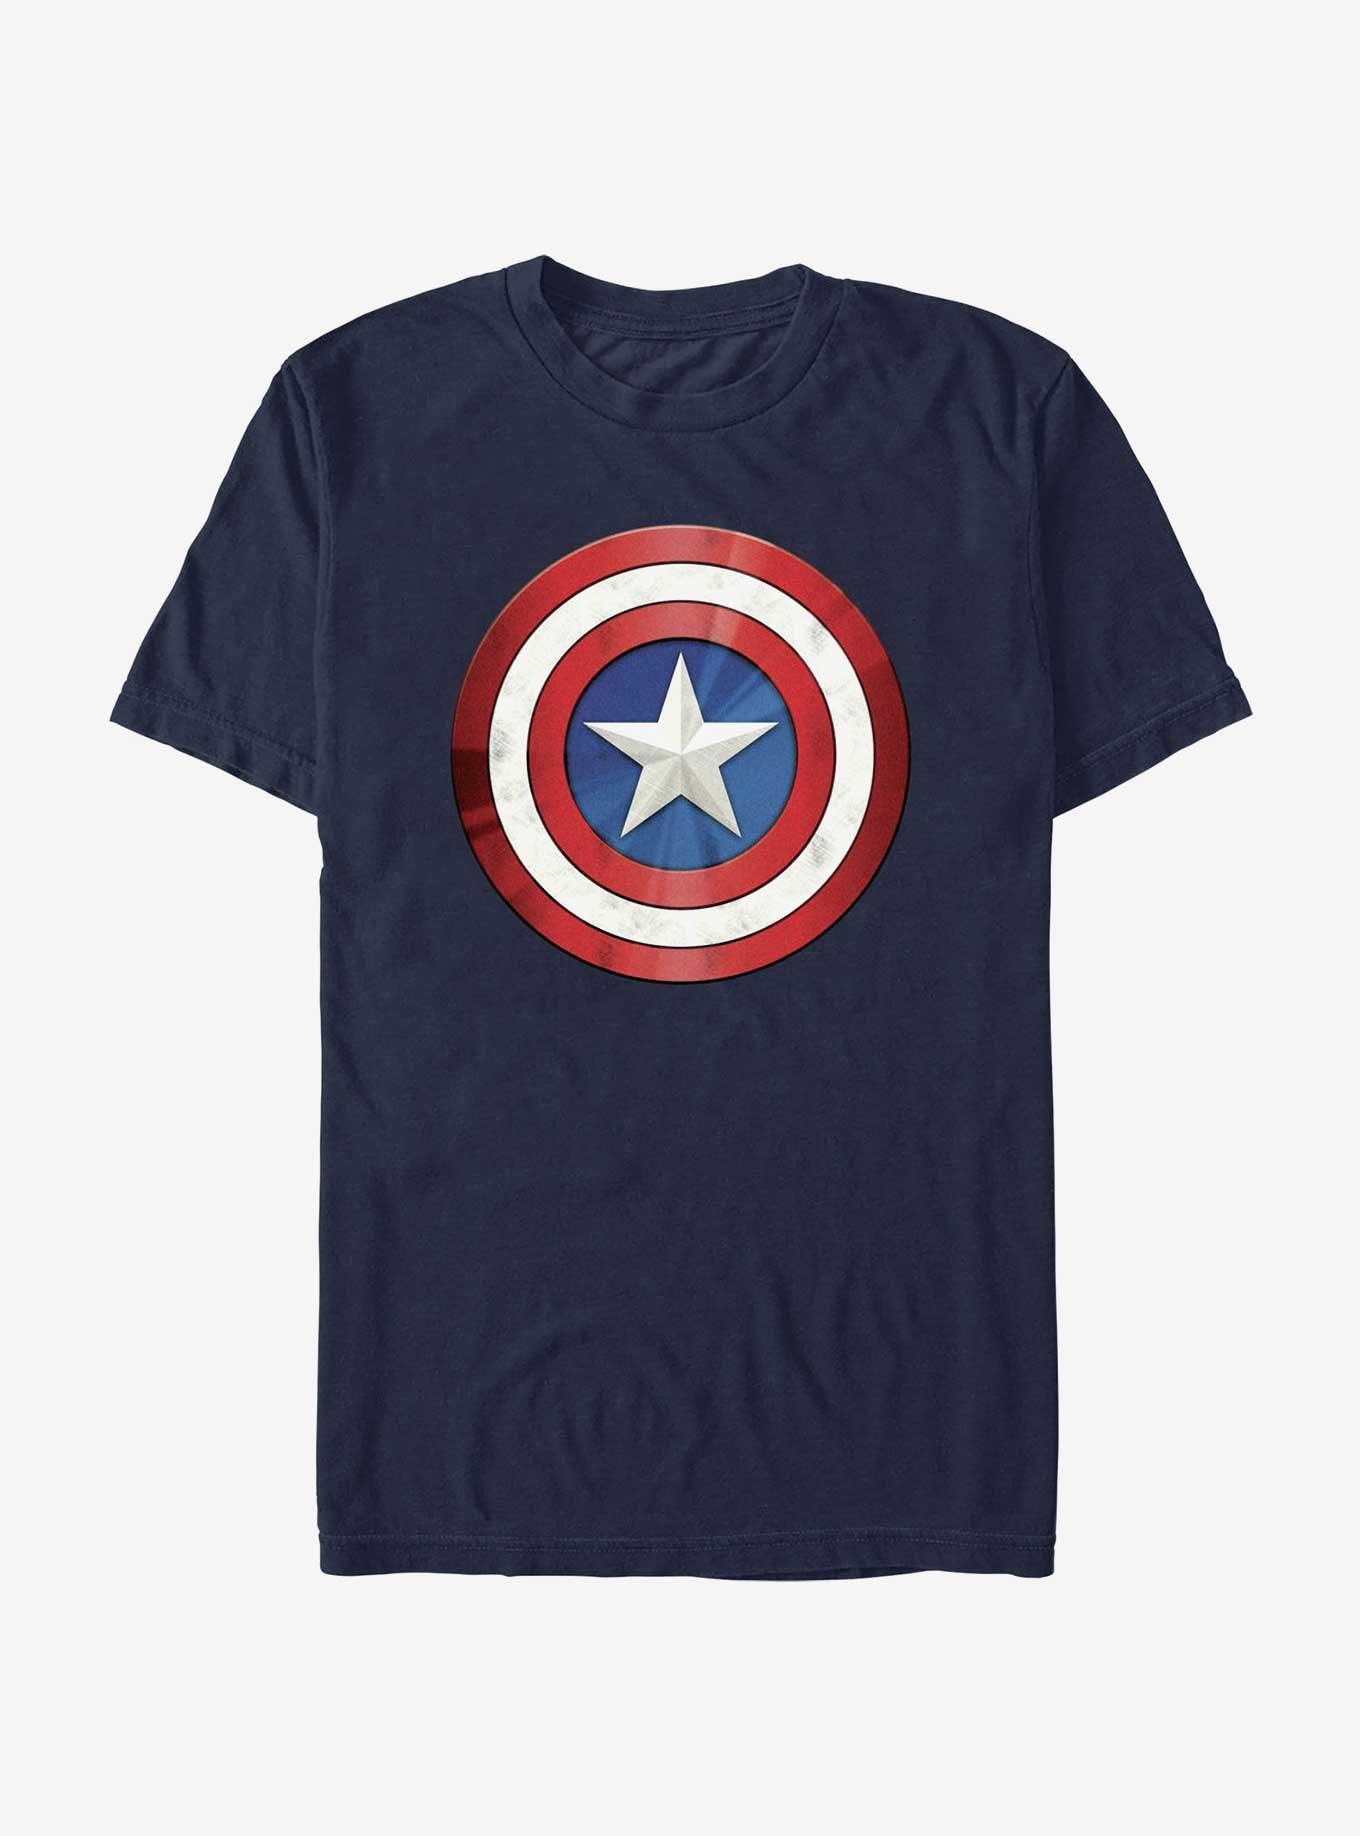 Marvel Captain America Shiny Shield T-Shirt, , hi-res